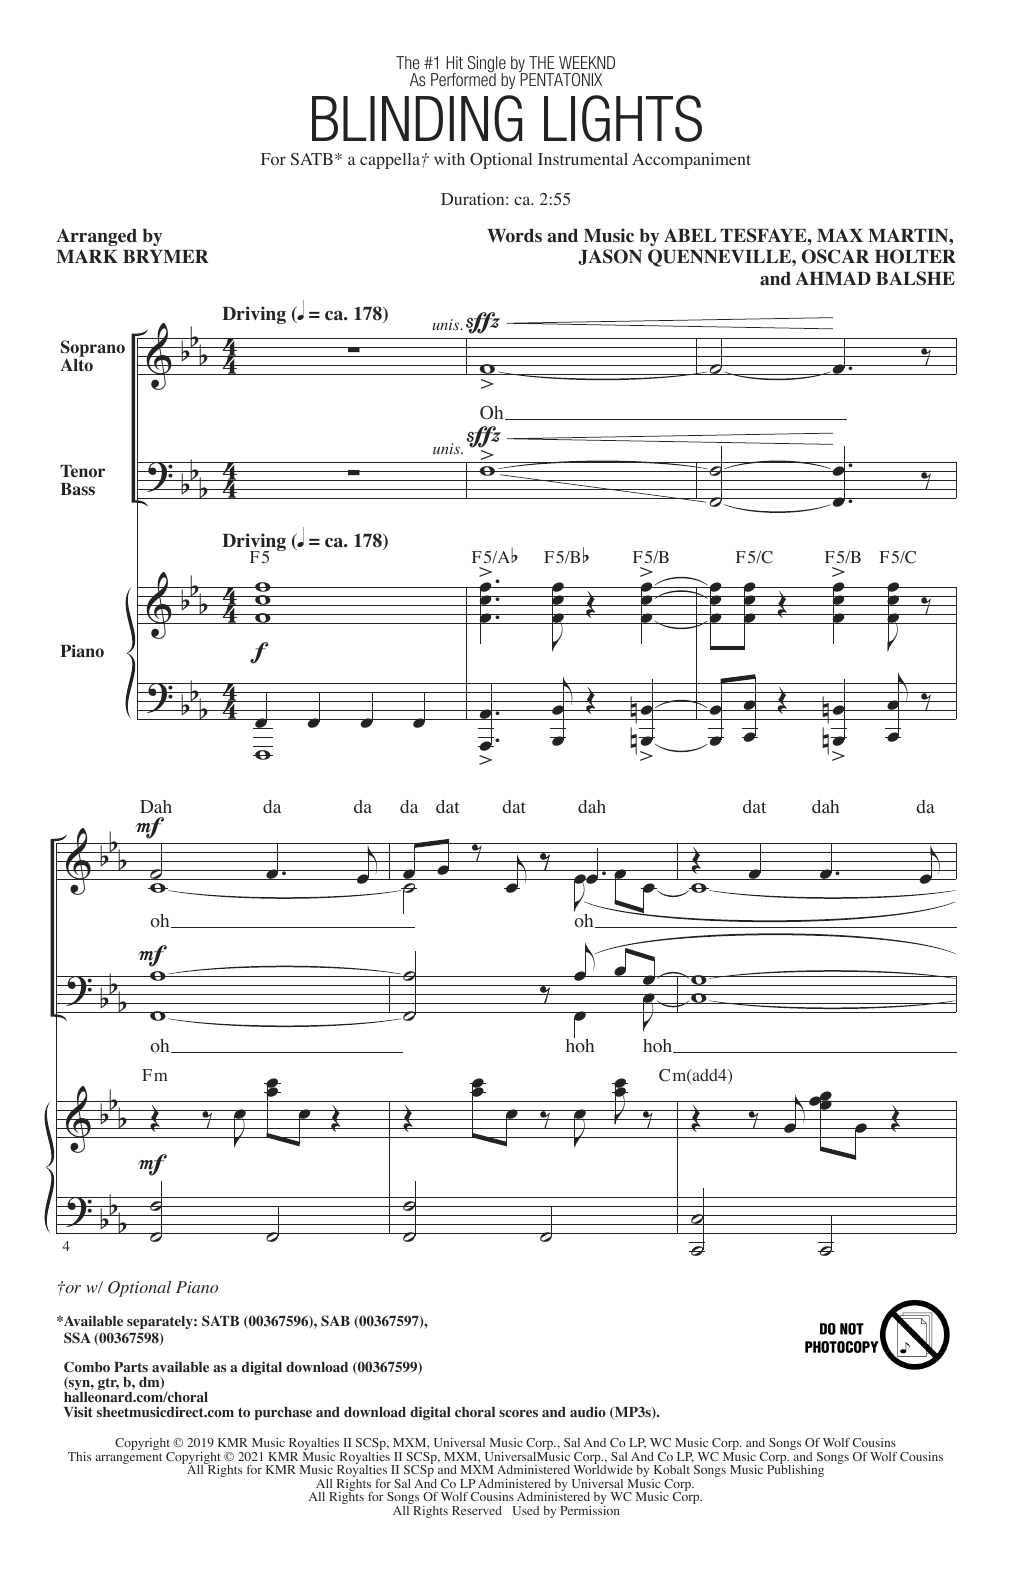 Pentatonix Blinding Lights (arr. Mark Brymer) sheet music notes and chords arranged for SATB Choir